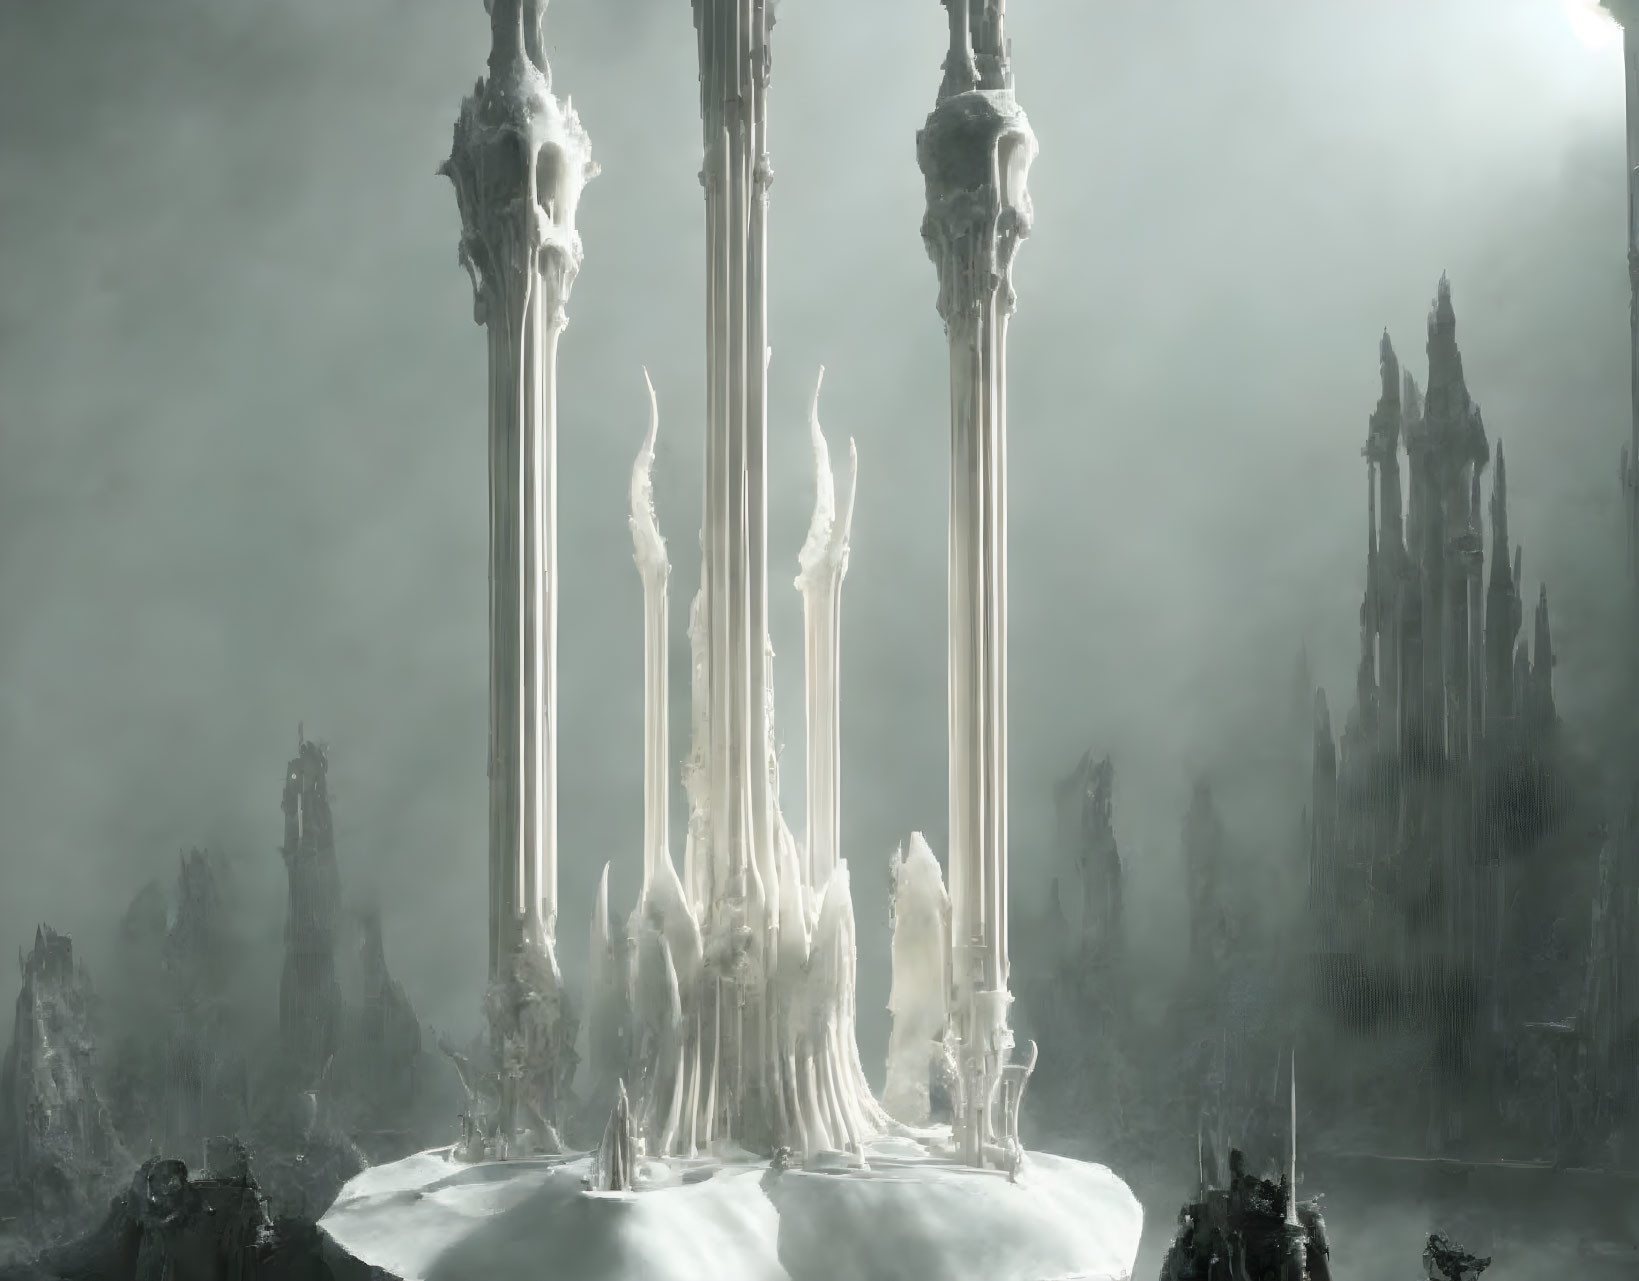 Ethereal landscape with skeletal spires in misty terrain